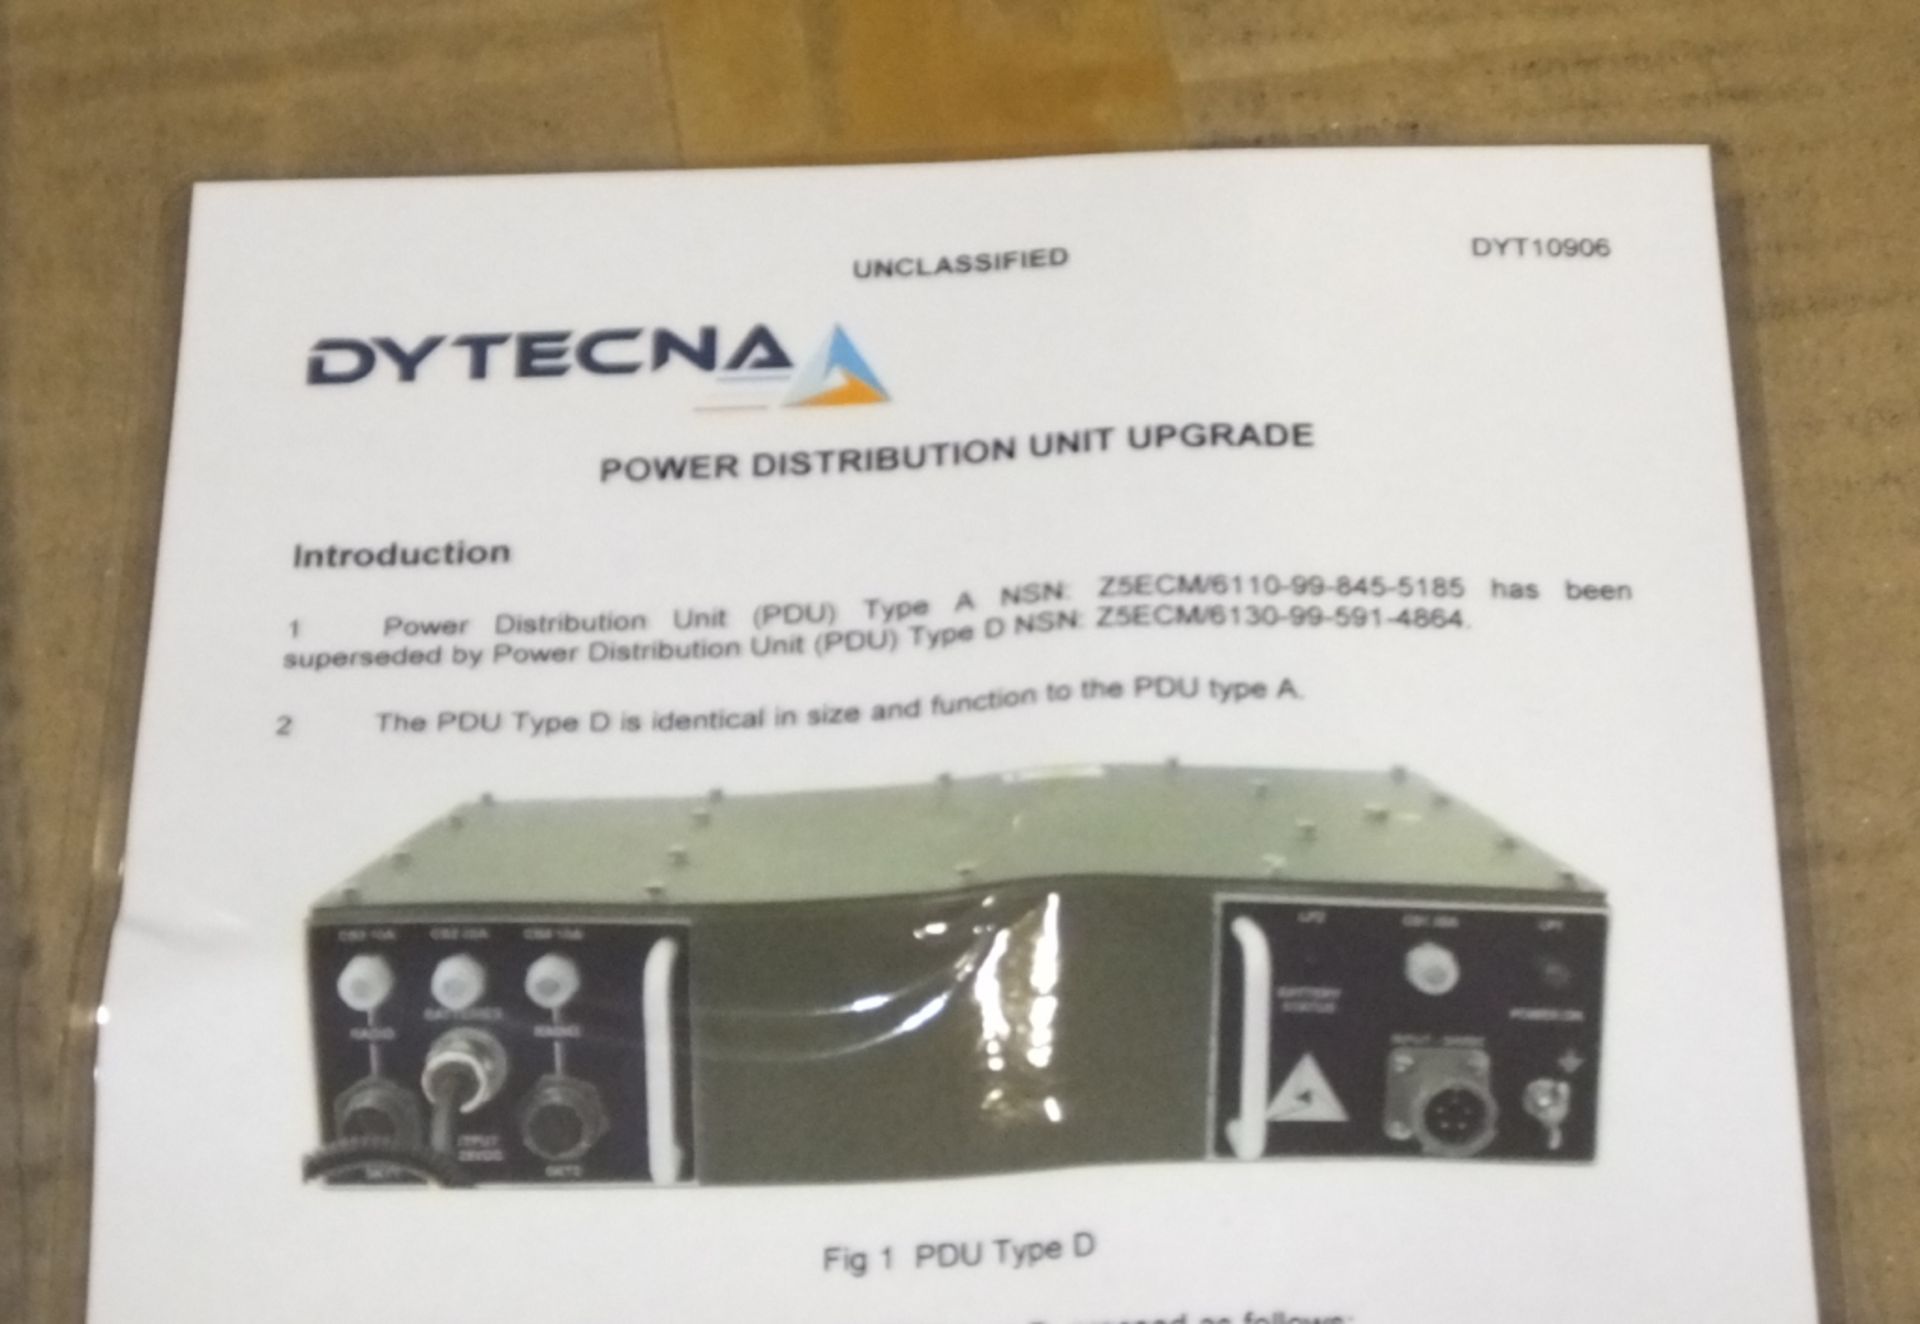 30x Dytecna Power Distribution upgrafe units - NSN 6130-99-591-4864 - Image 5 of 5